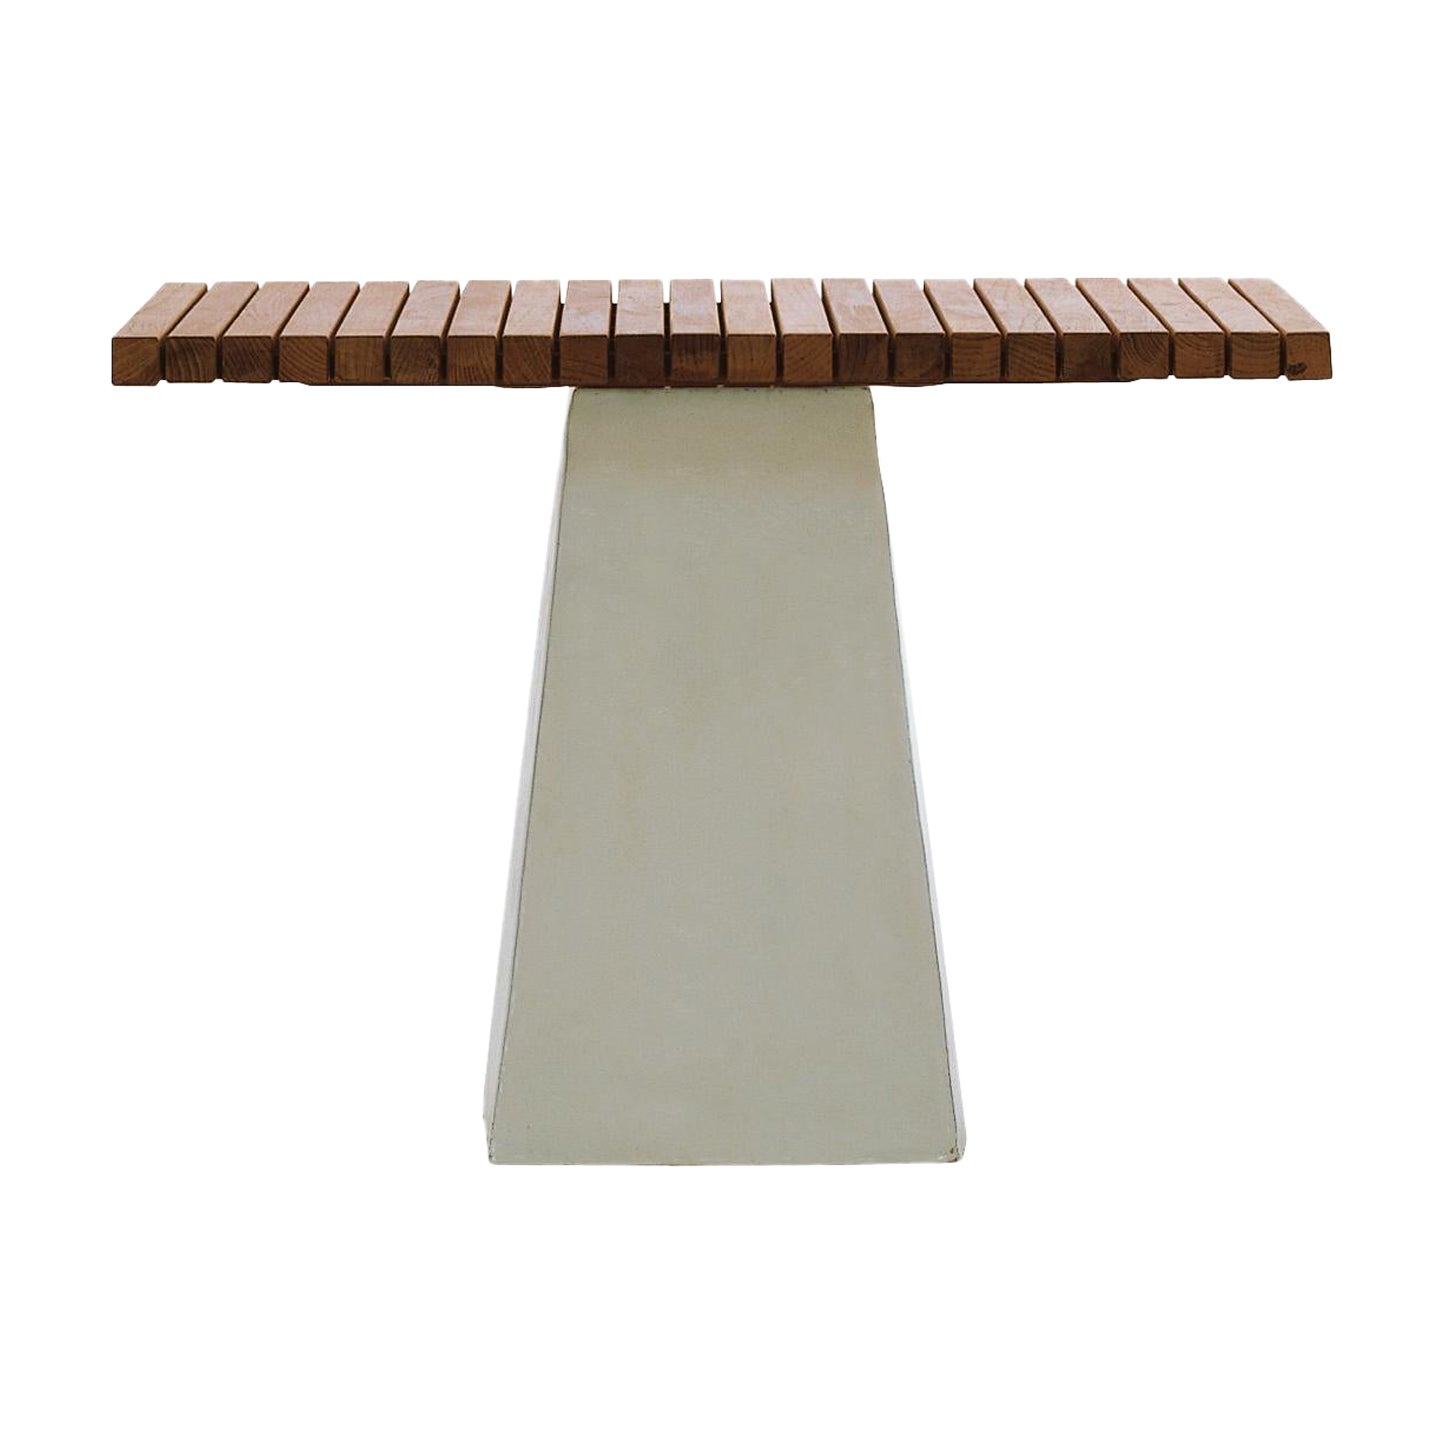 Gervasoni Large Inout 35 Table in Natural Teak Slats Top with White Ceramic Base